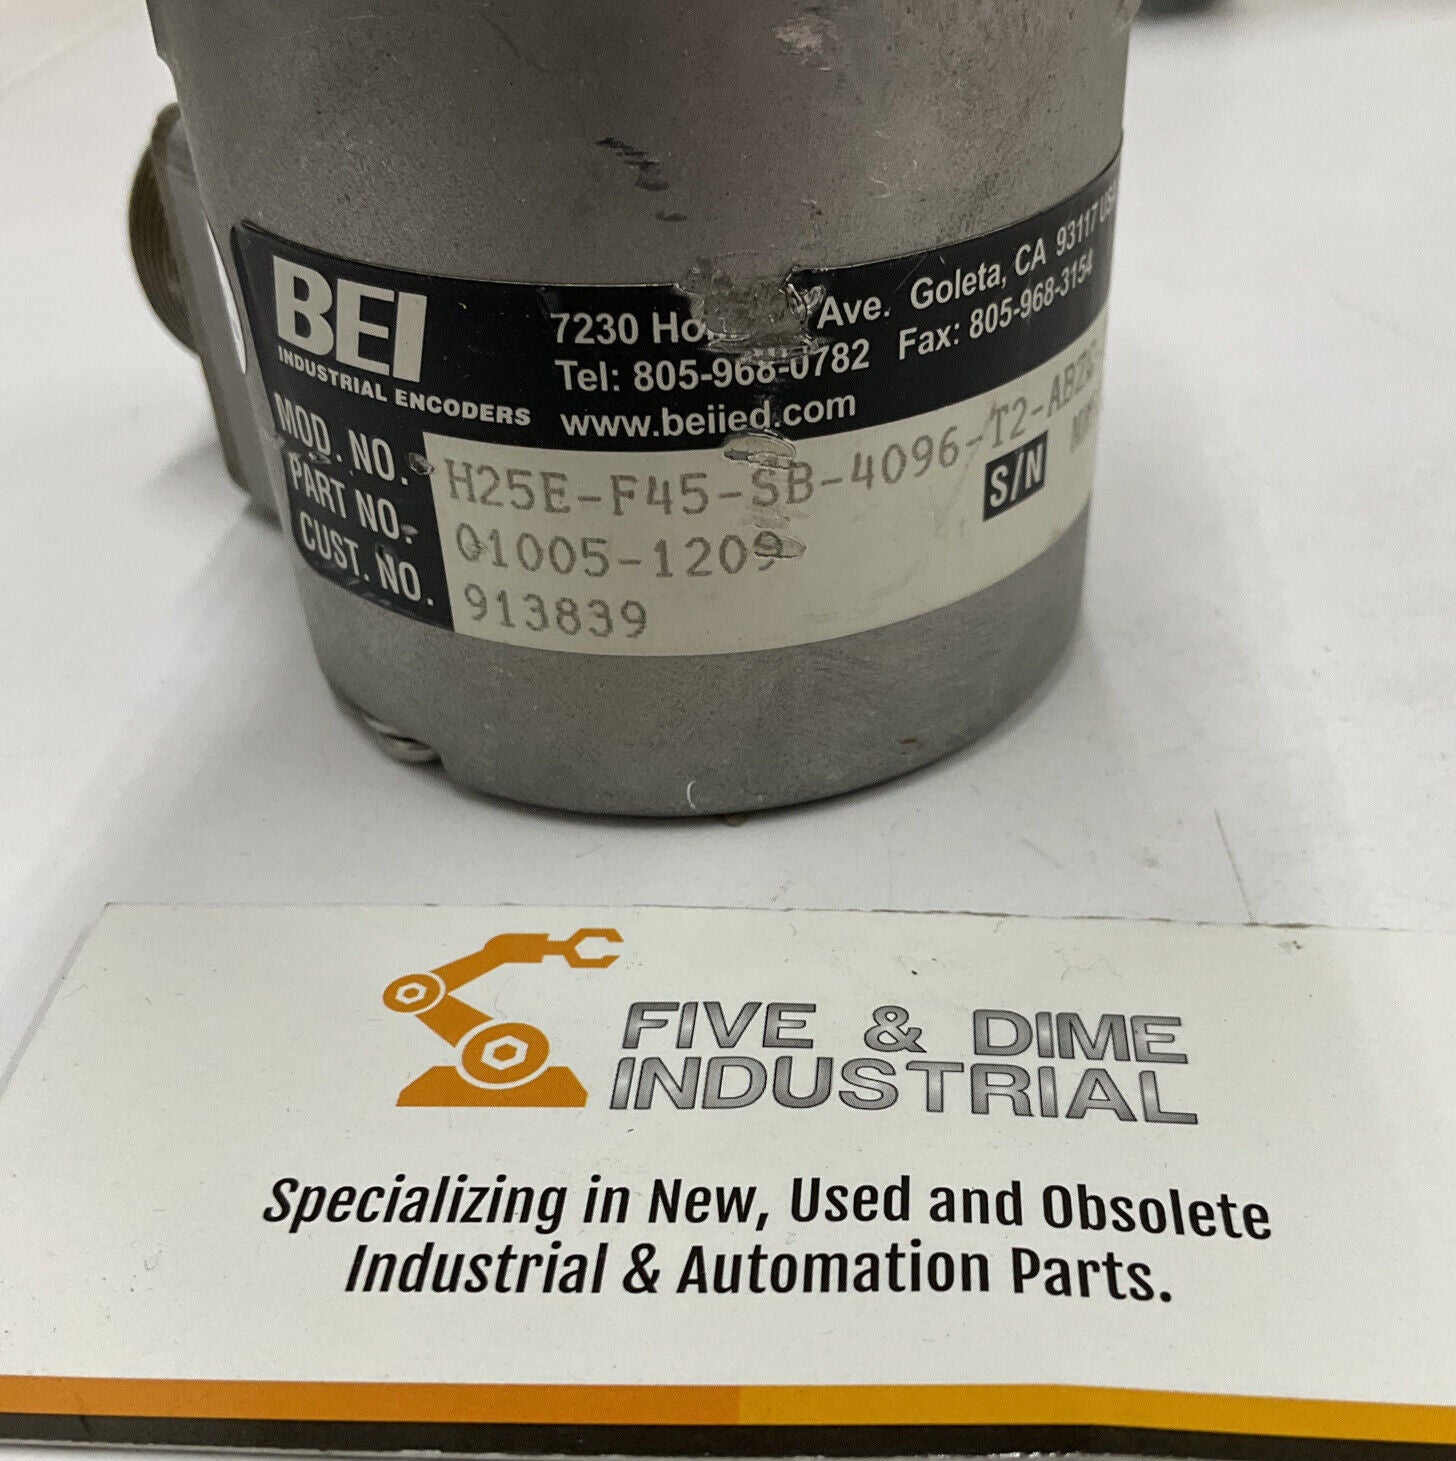 BEI 01005-1209 Industrial Encoder H25E-F45-SB-4096-T2  (RE125) - 0